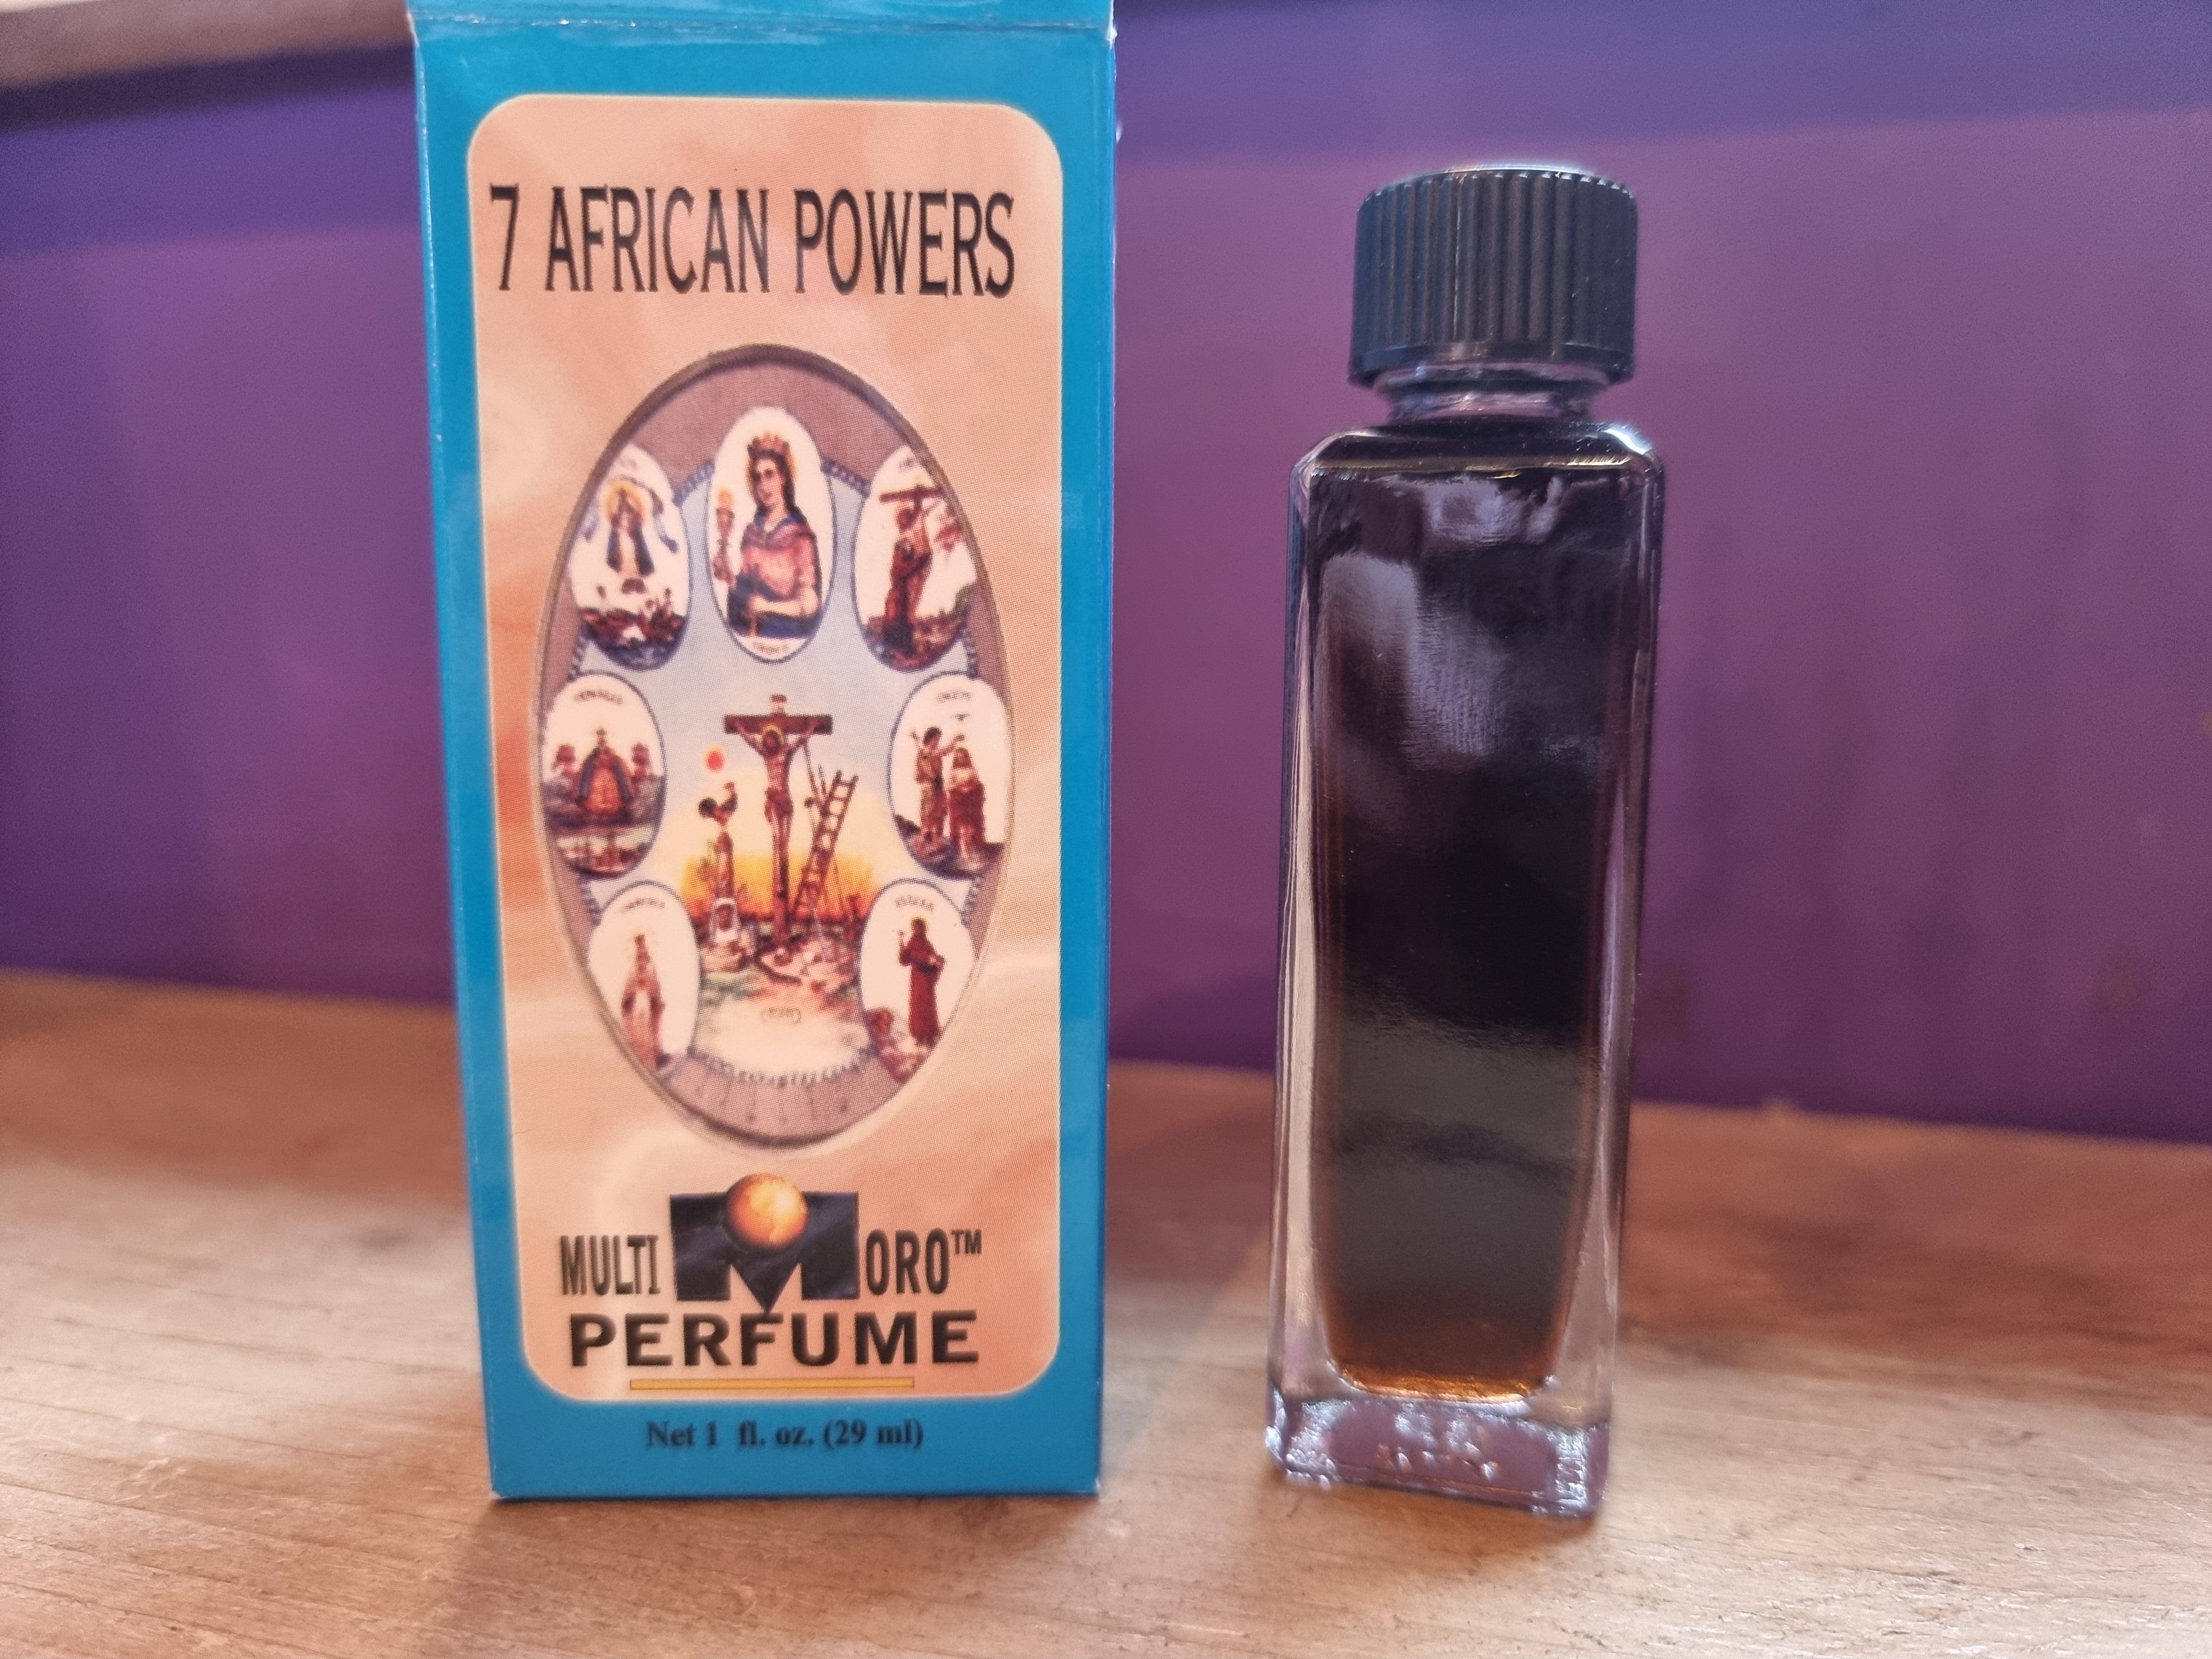 7 African Powers Perfume